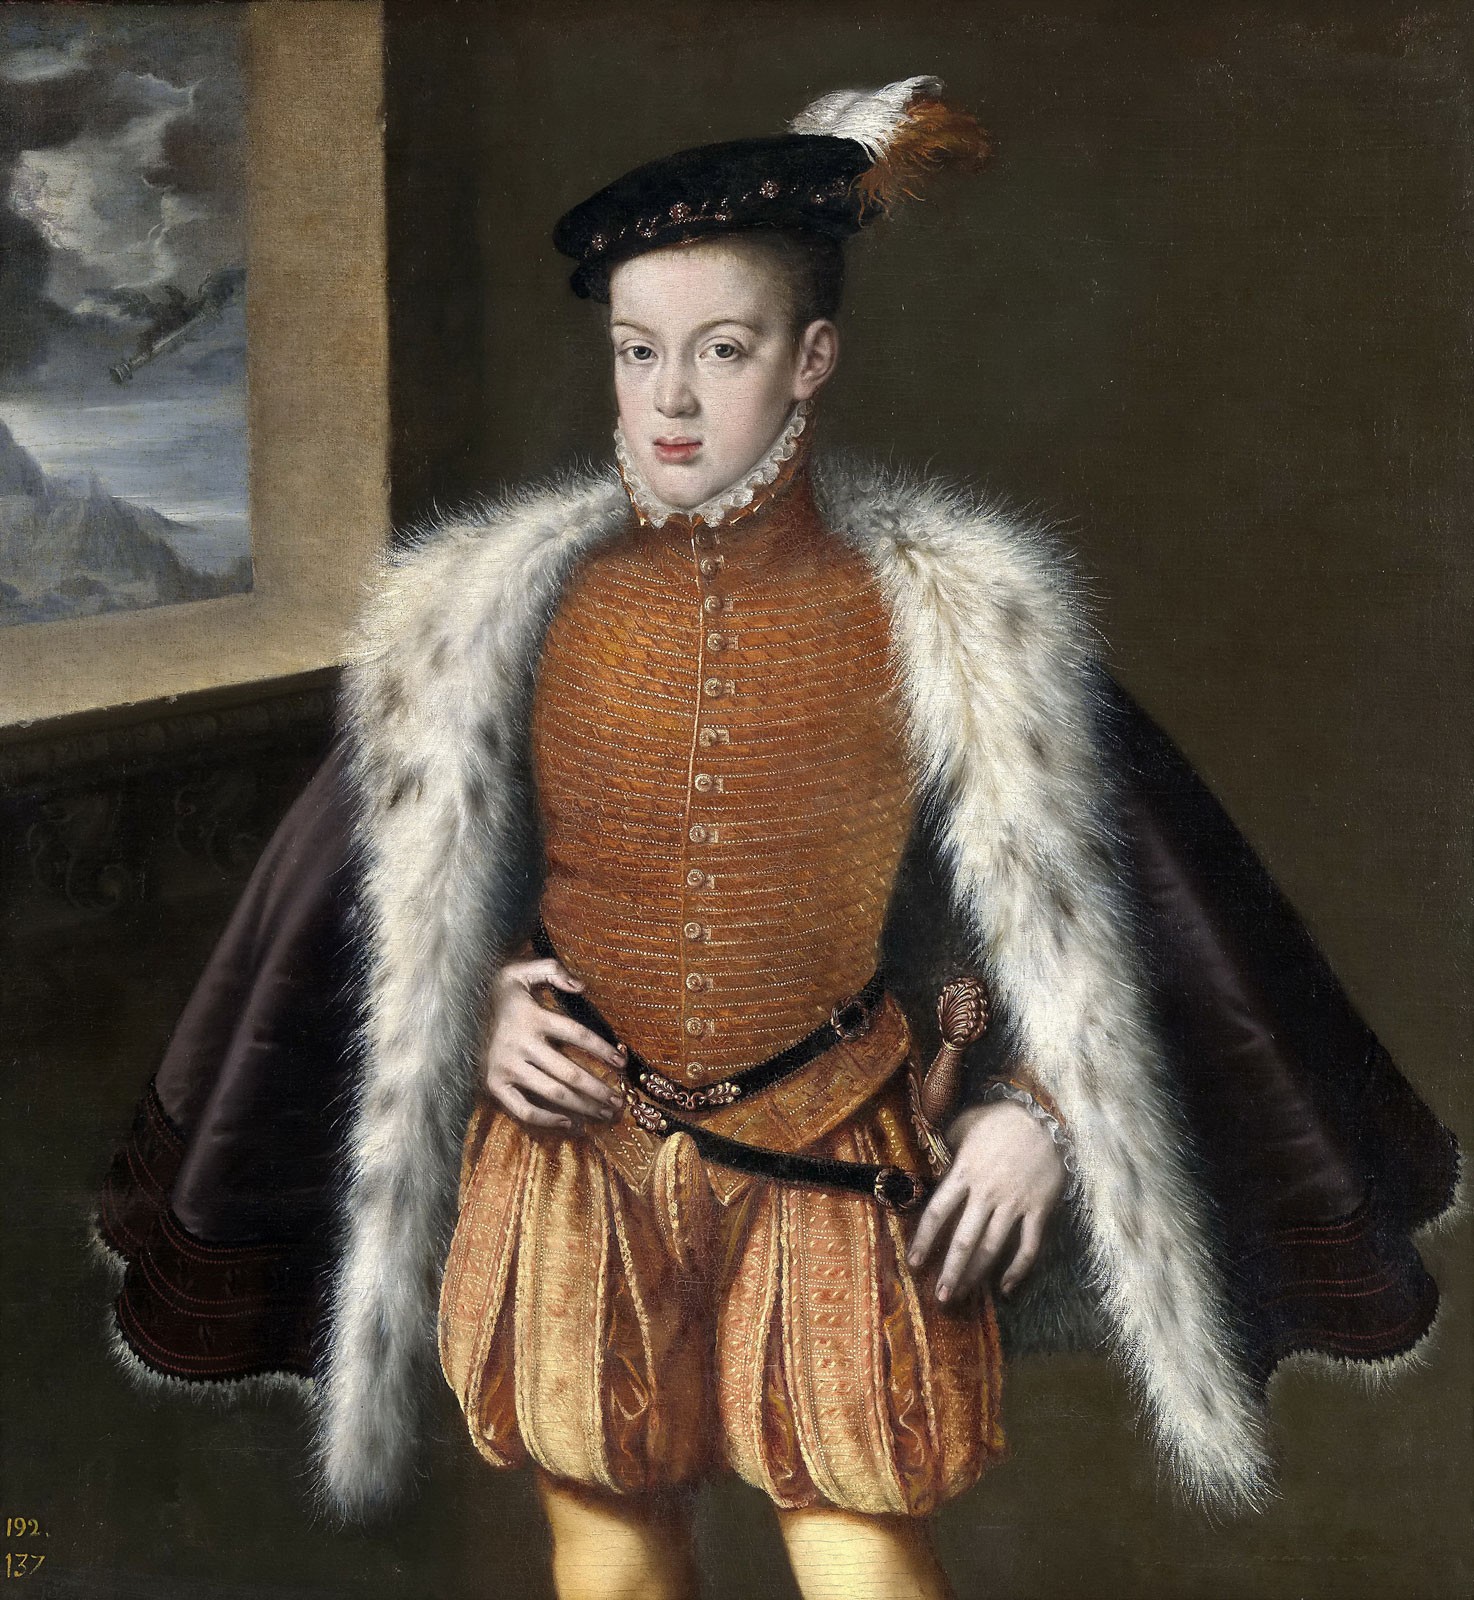 Prince Don Carlos of Austria, c.1558, Oil on Canvas